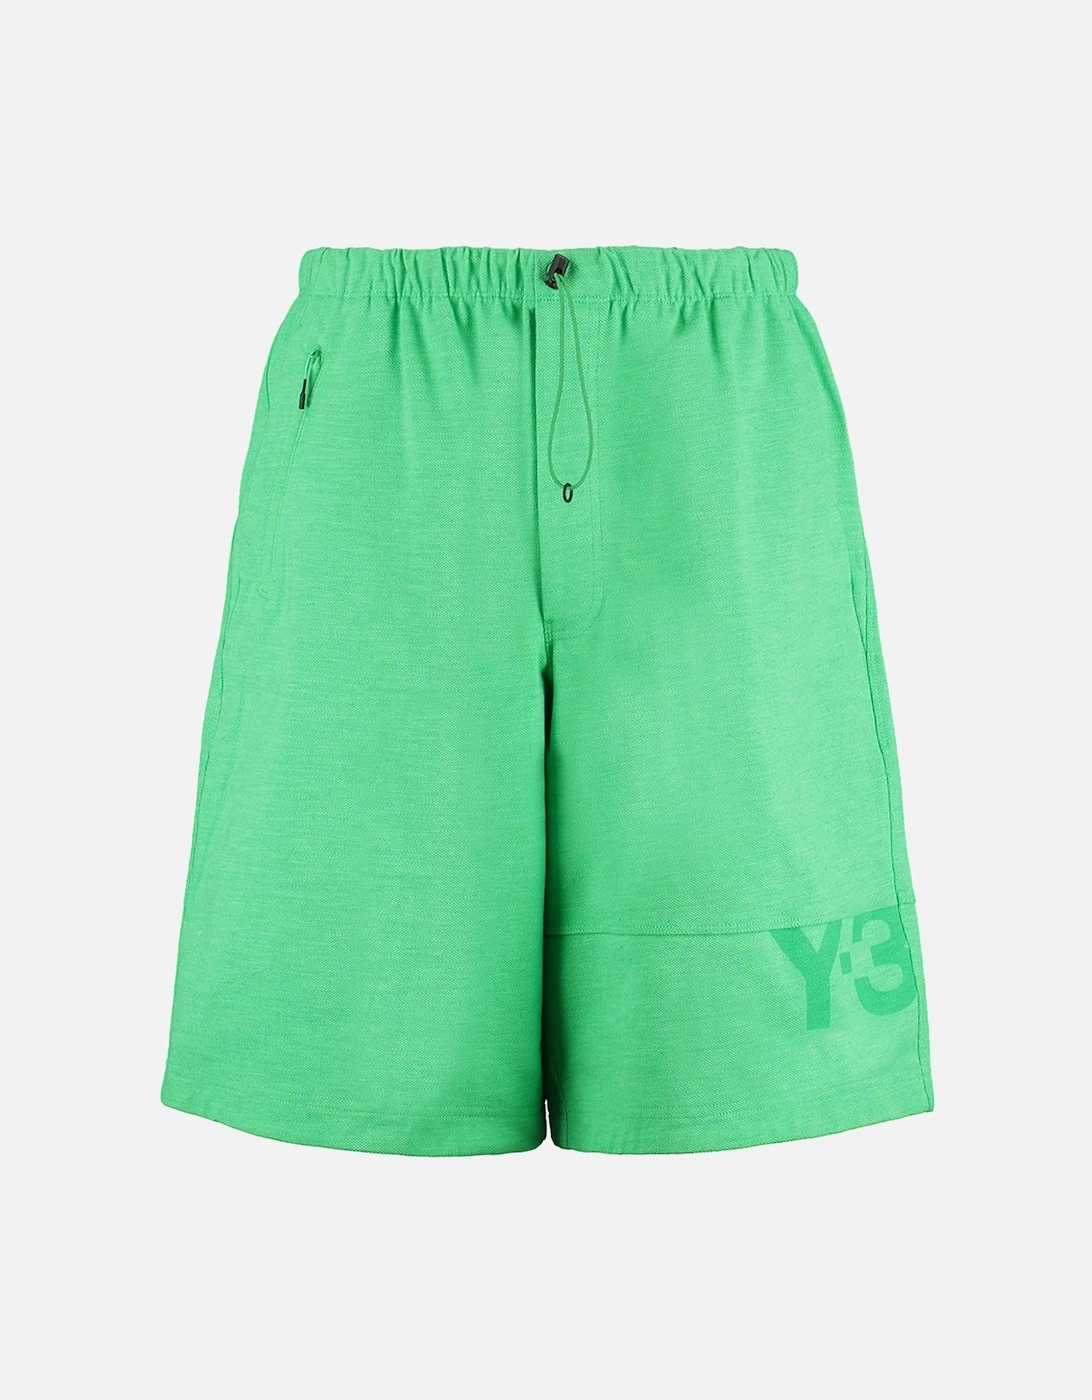 Y-3 Men's Logo Shorts Green, 5 of 4